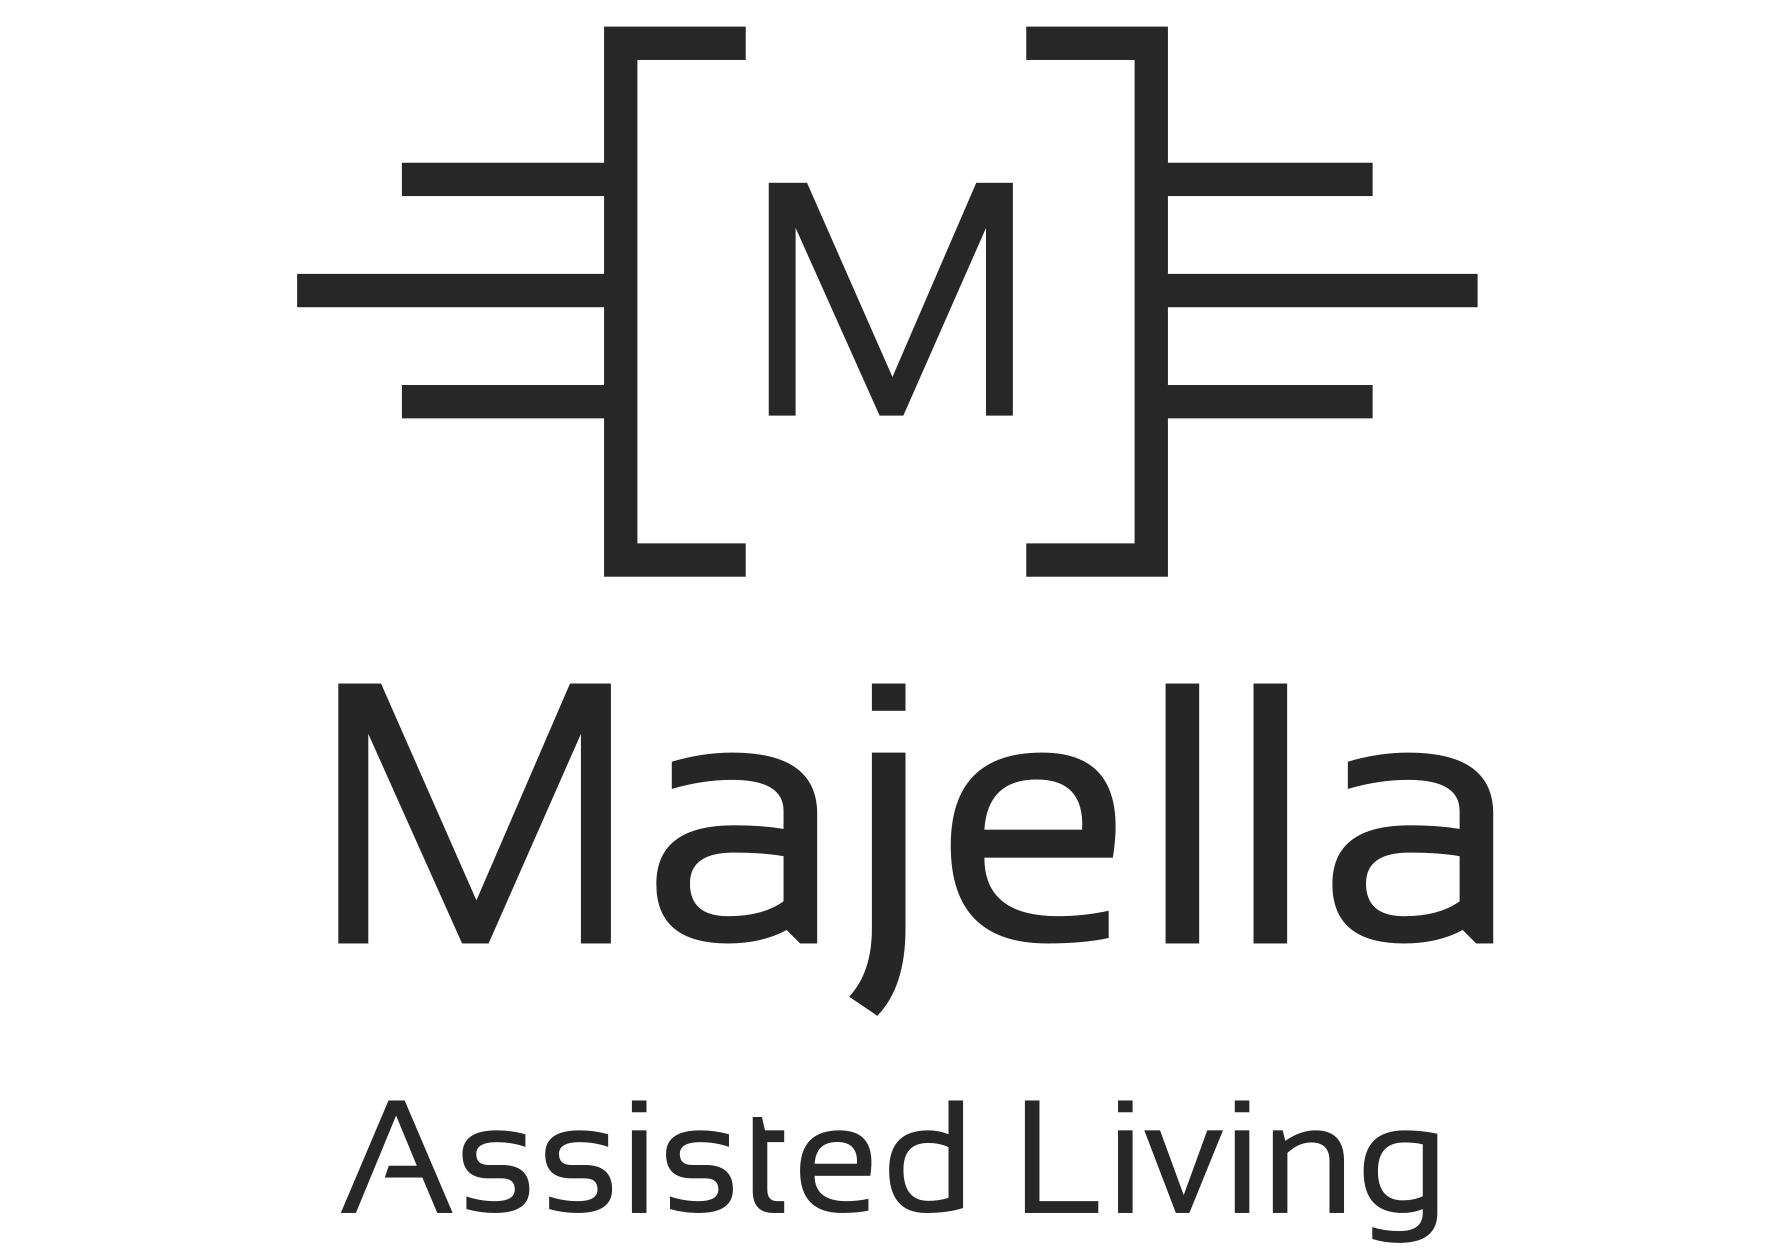 Majella Assisted Living